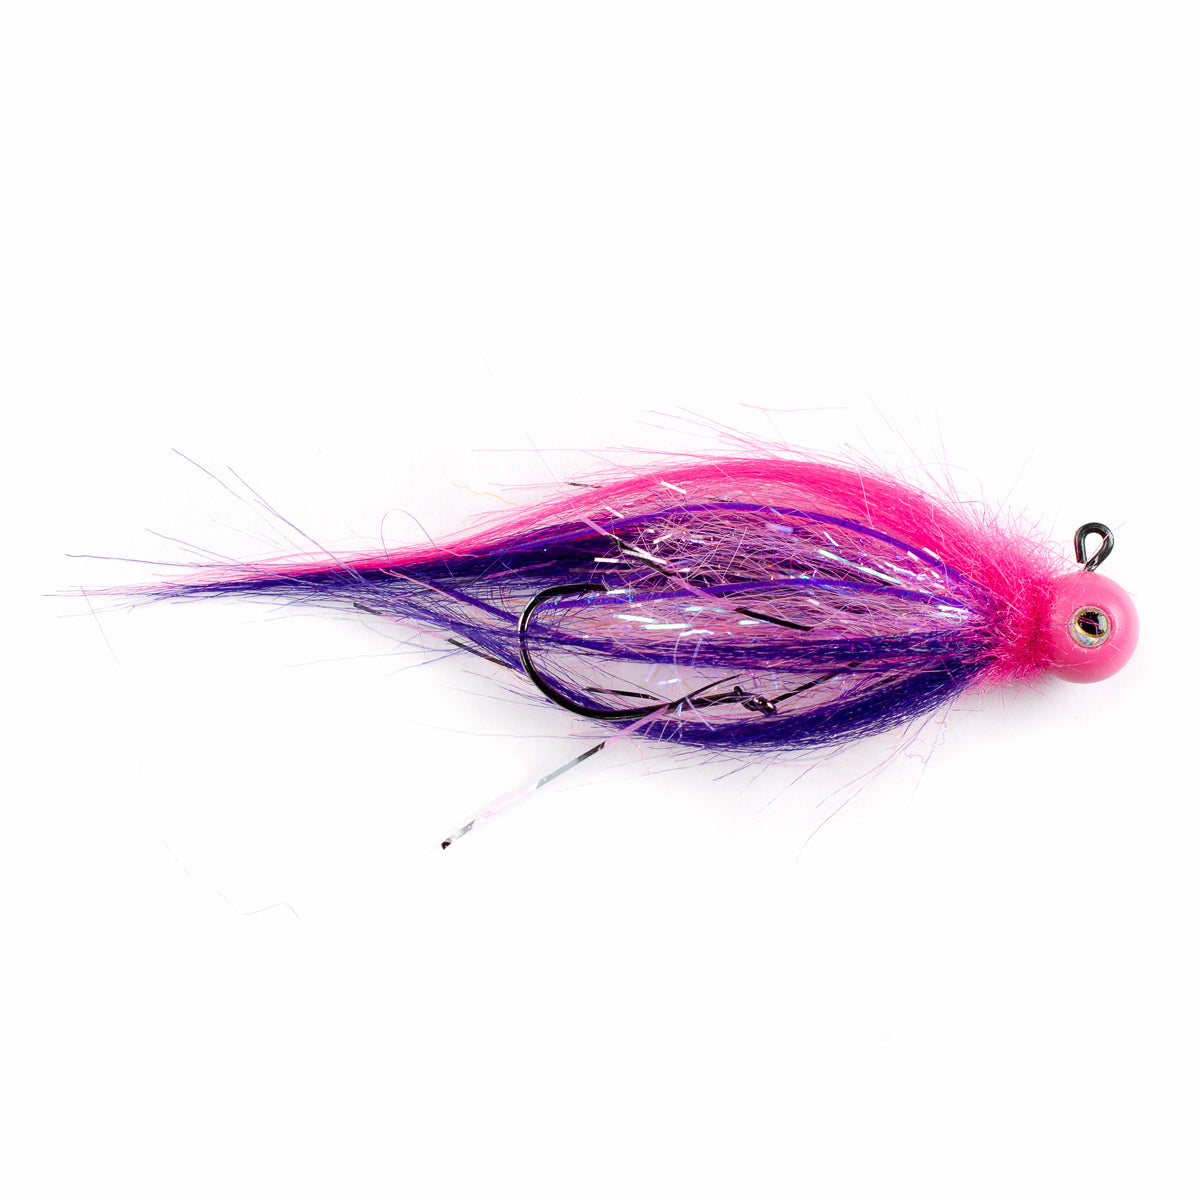 pink quarter ounce jig head with pink Fair Flies fly fur collar and tail, purple Fair Flies fly fur, pink flash, and pink and black barred flash for skirting material 